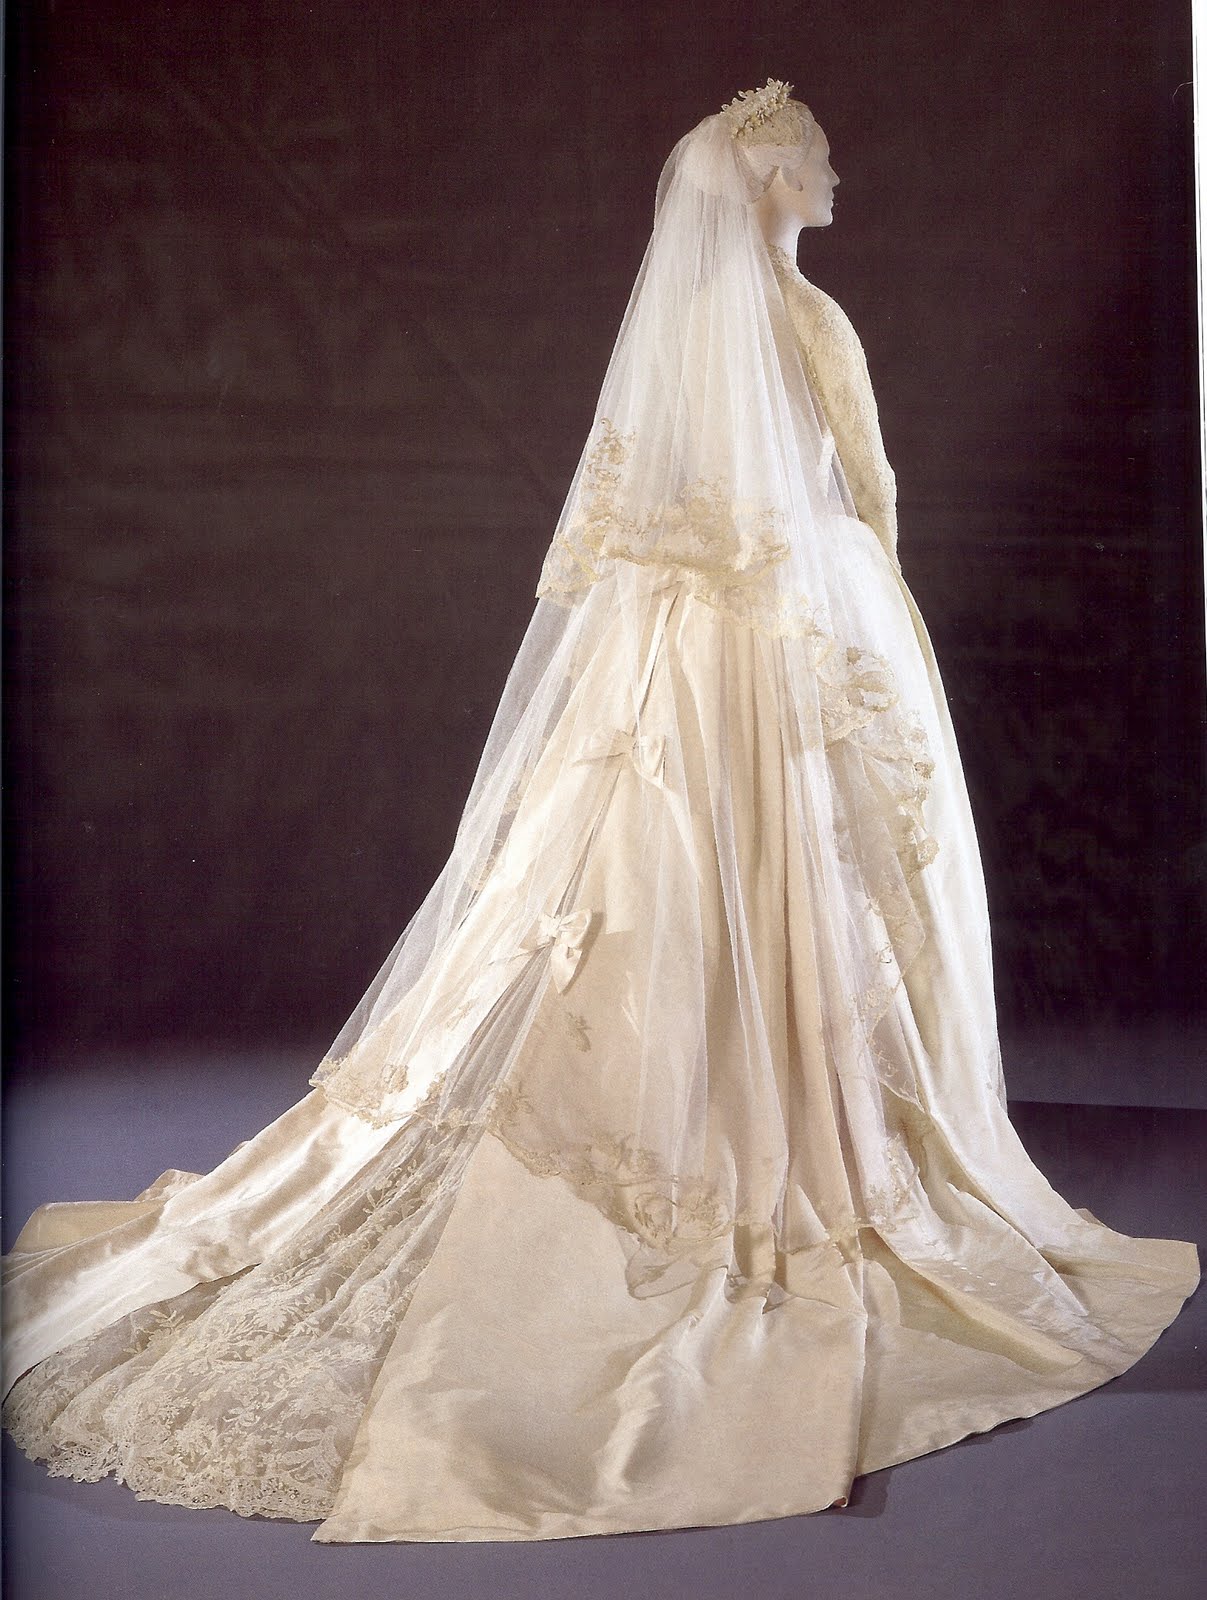 lace back wedding dresses 2012 photo from Philadelphia Museum of Art